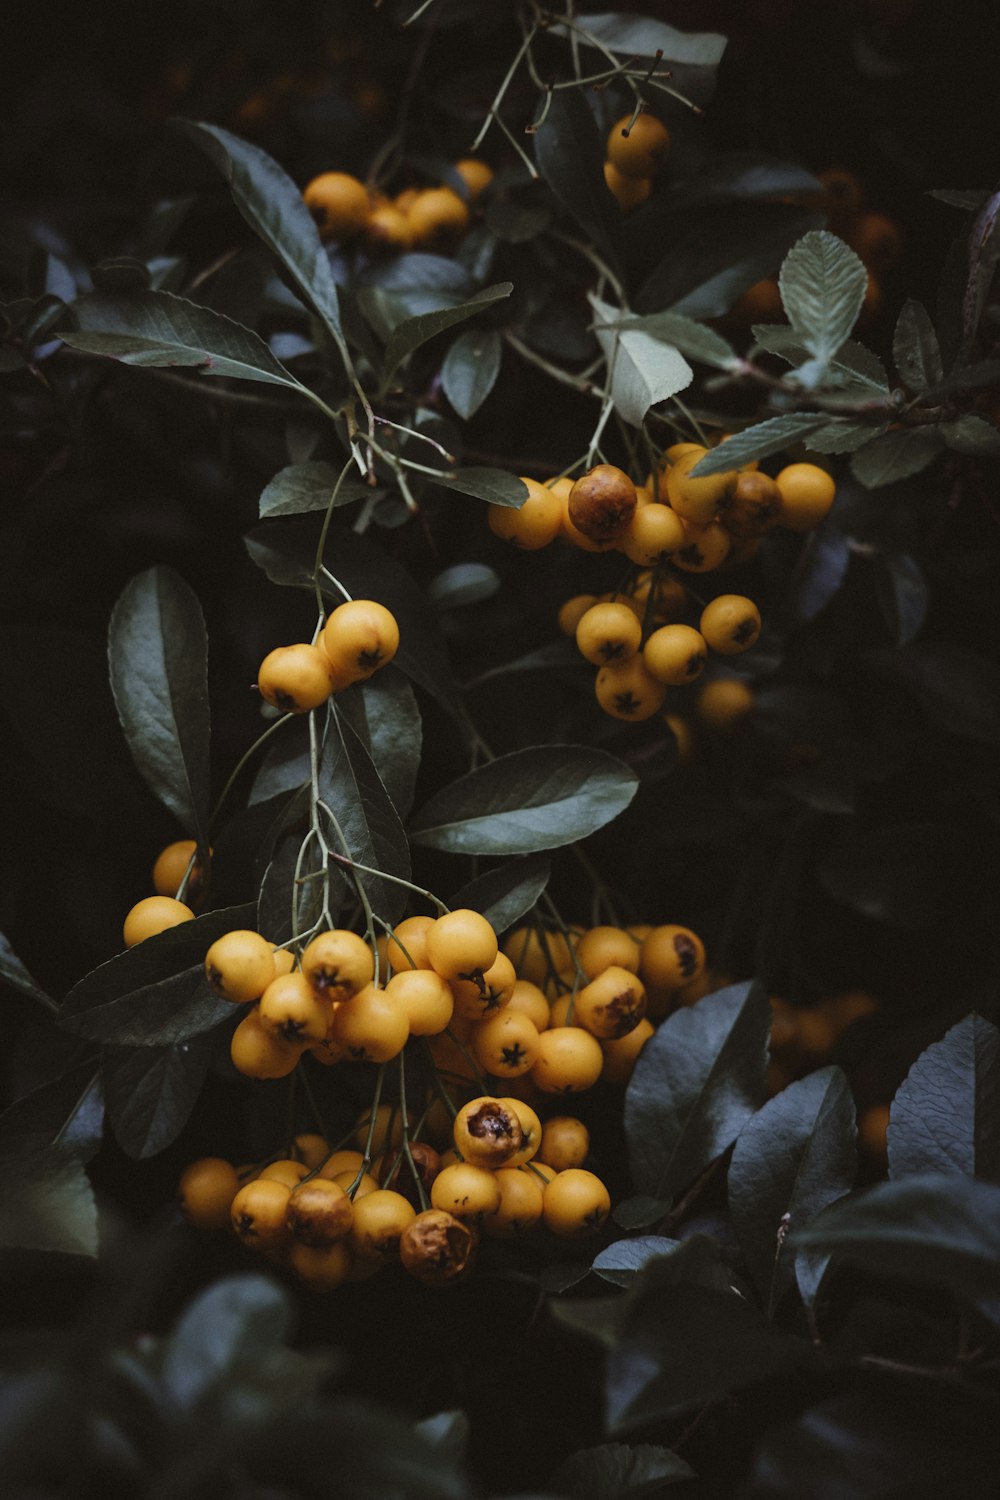 close-up photo of round yellow fruits